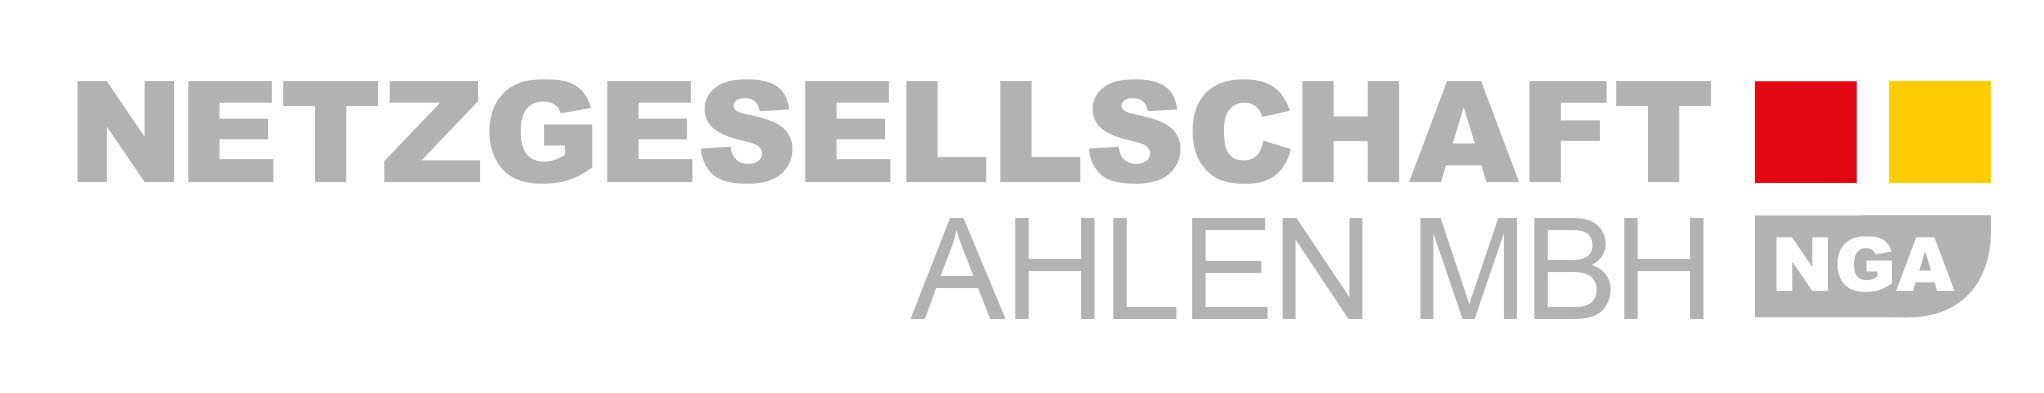 Logo Netzgesellschaft Ahlen